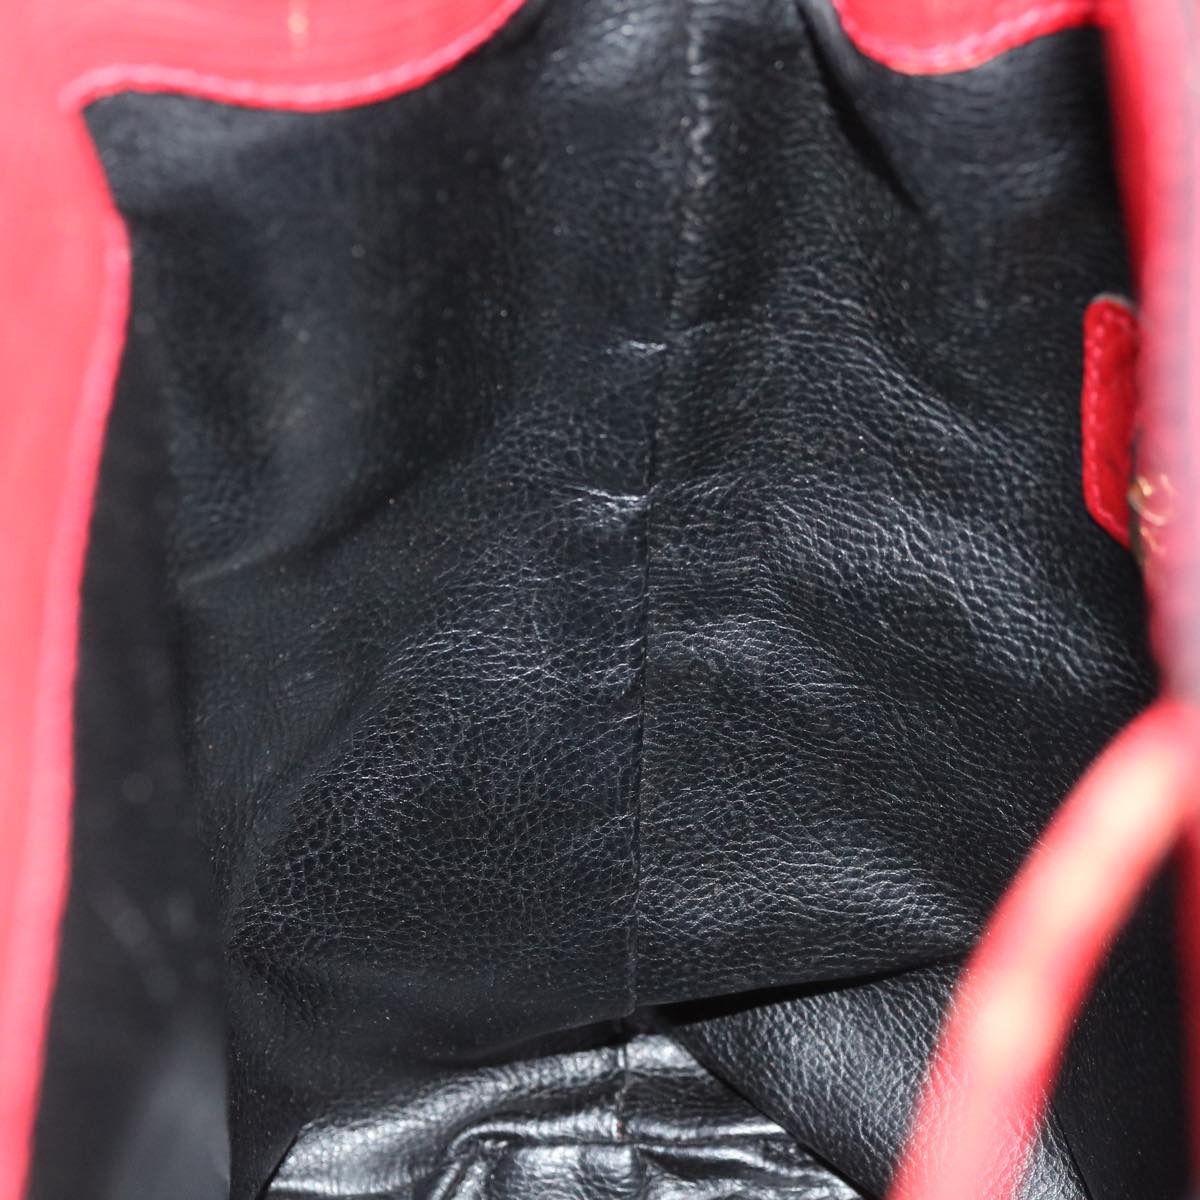 FENDI Shoulder Bag Leather Red Auth yk10770